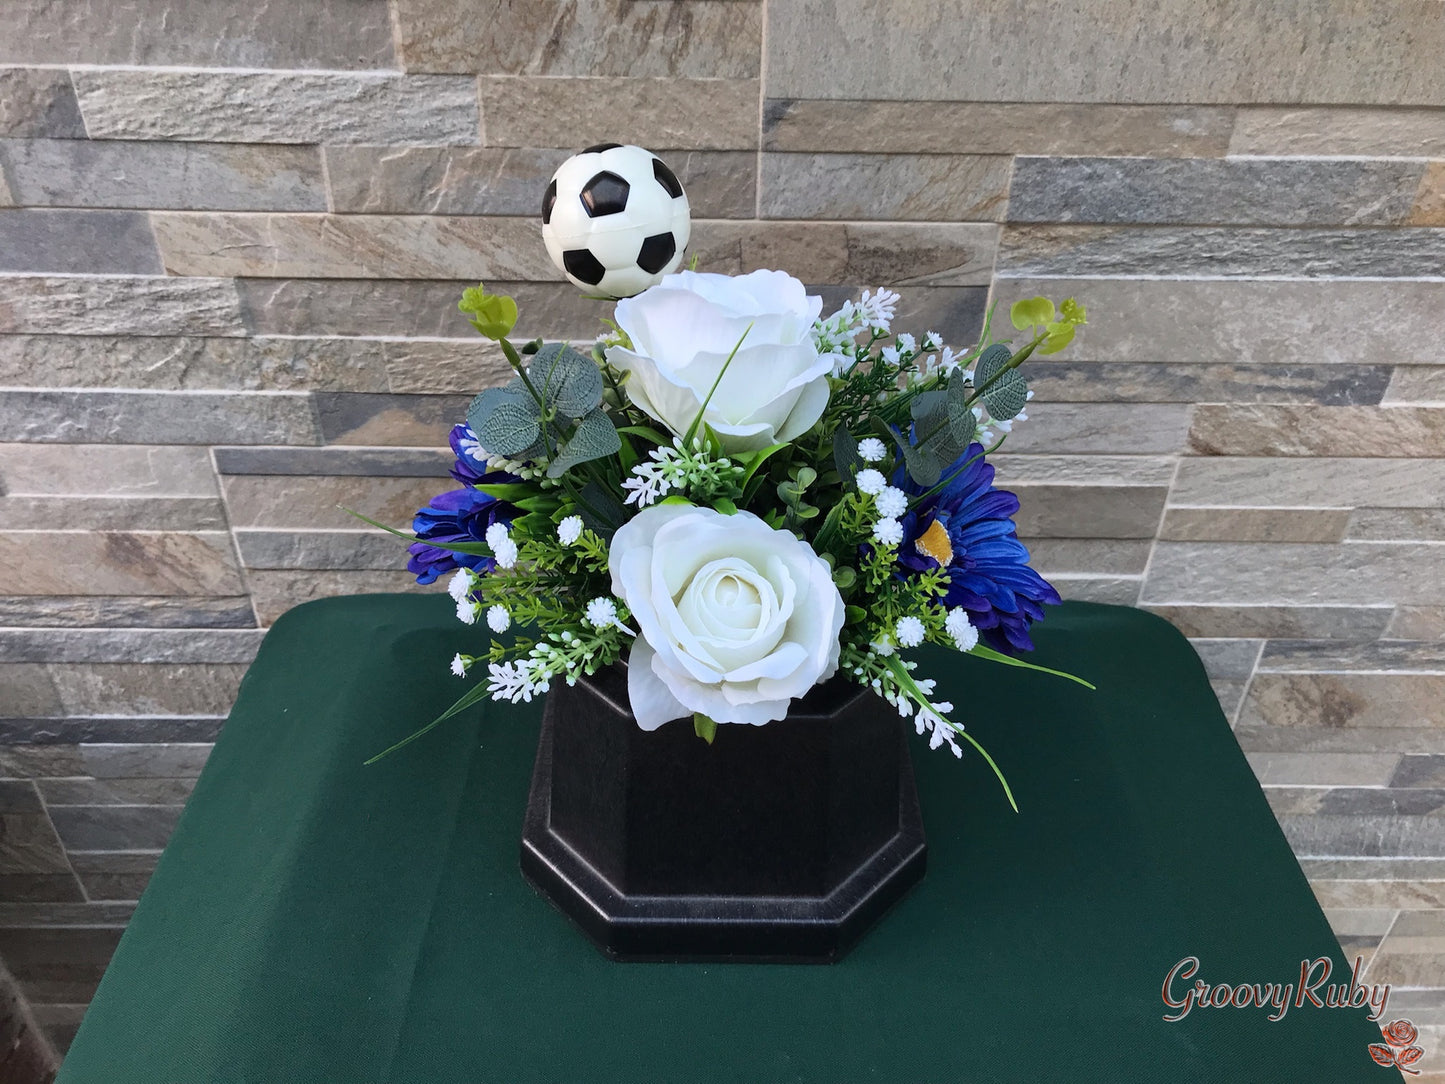 Royal Blue & White, Football Colour Grave Pot